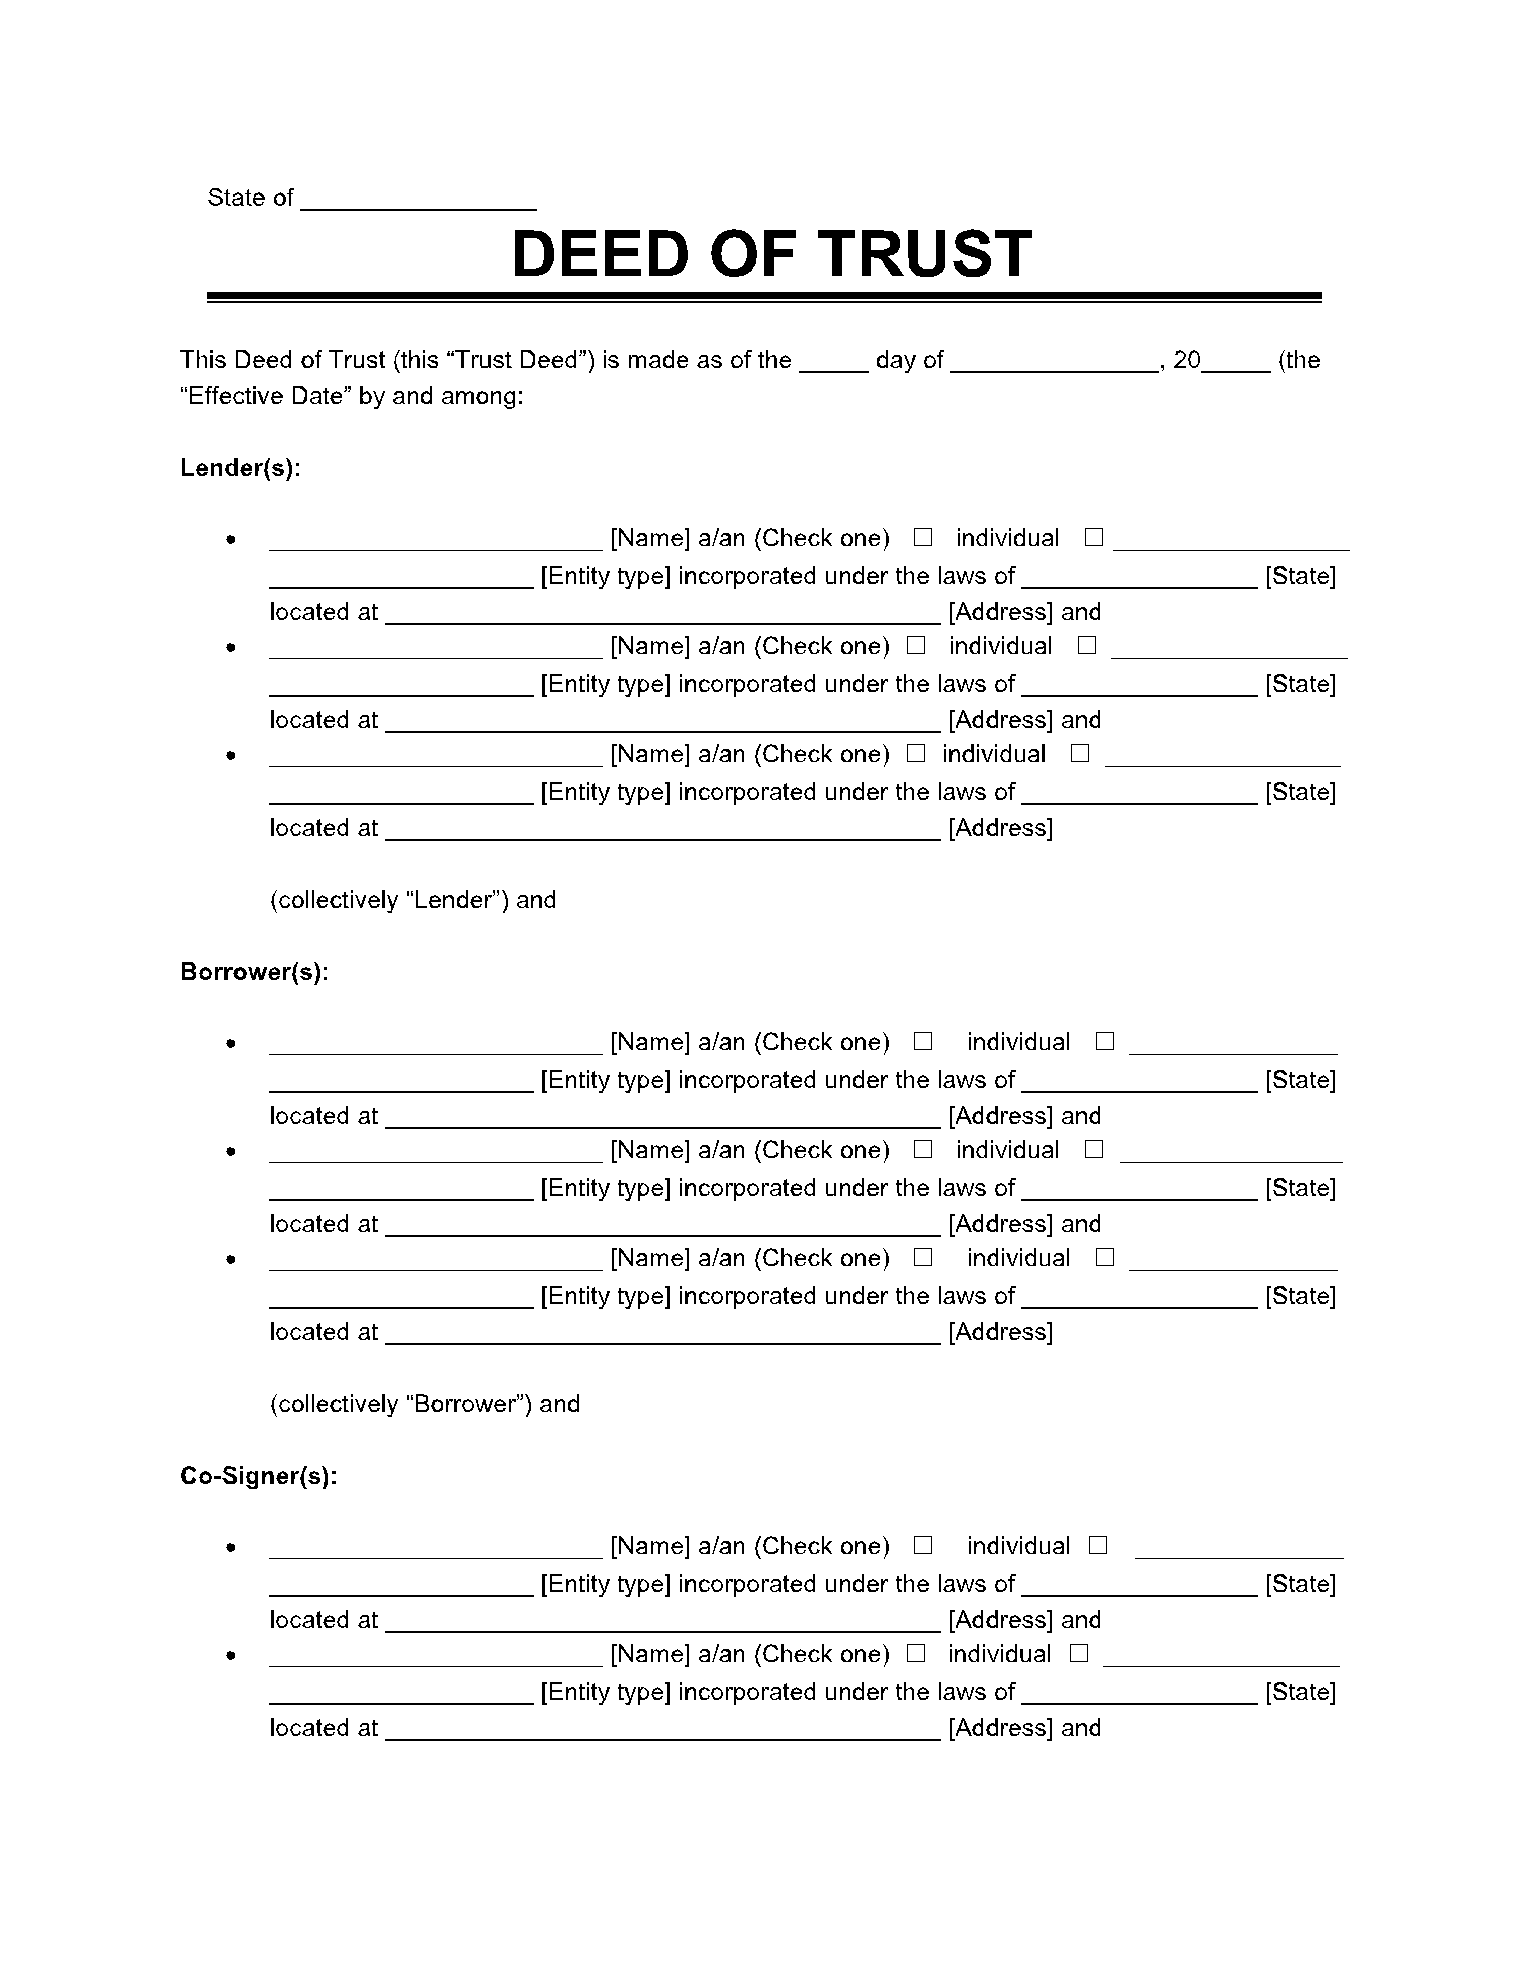 California Deed of Trust Form